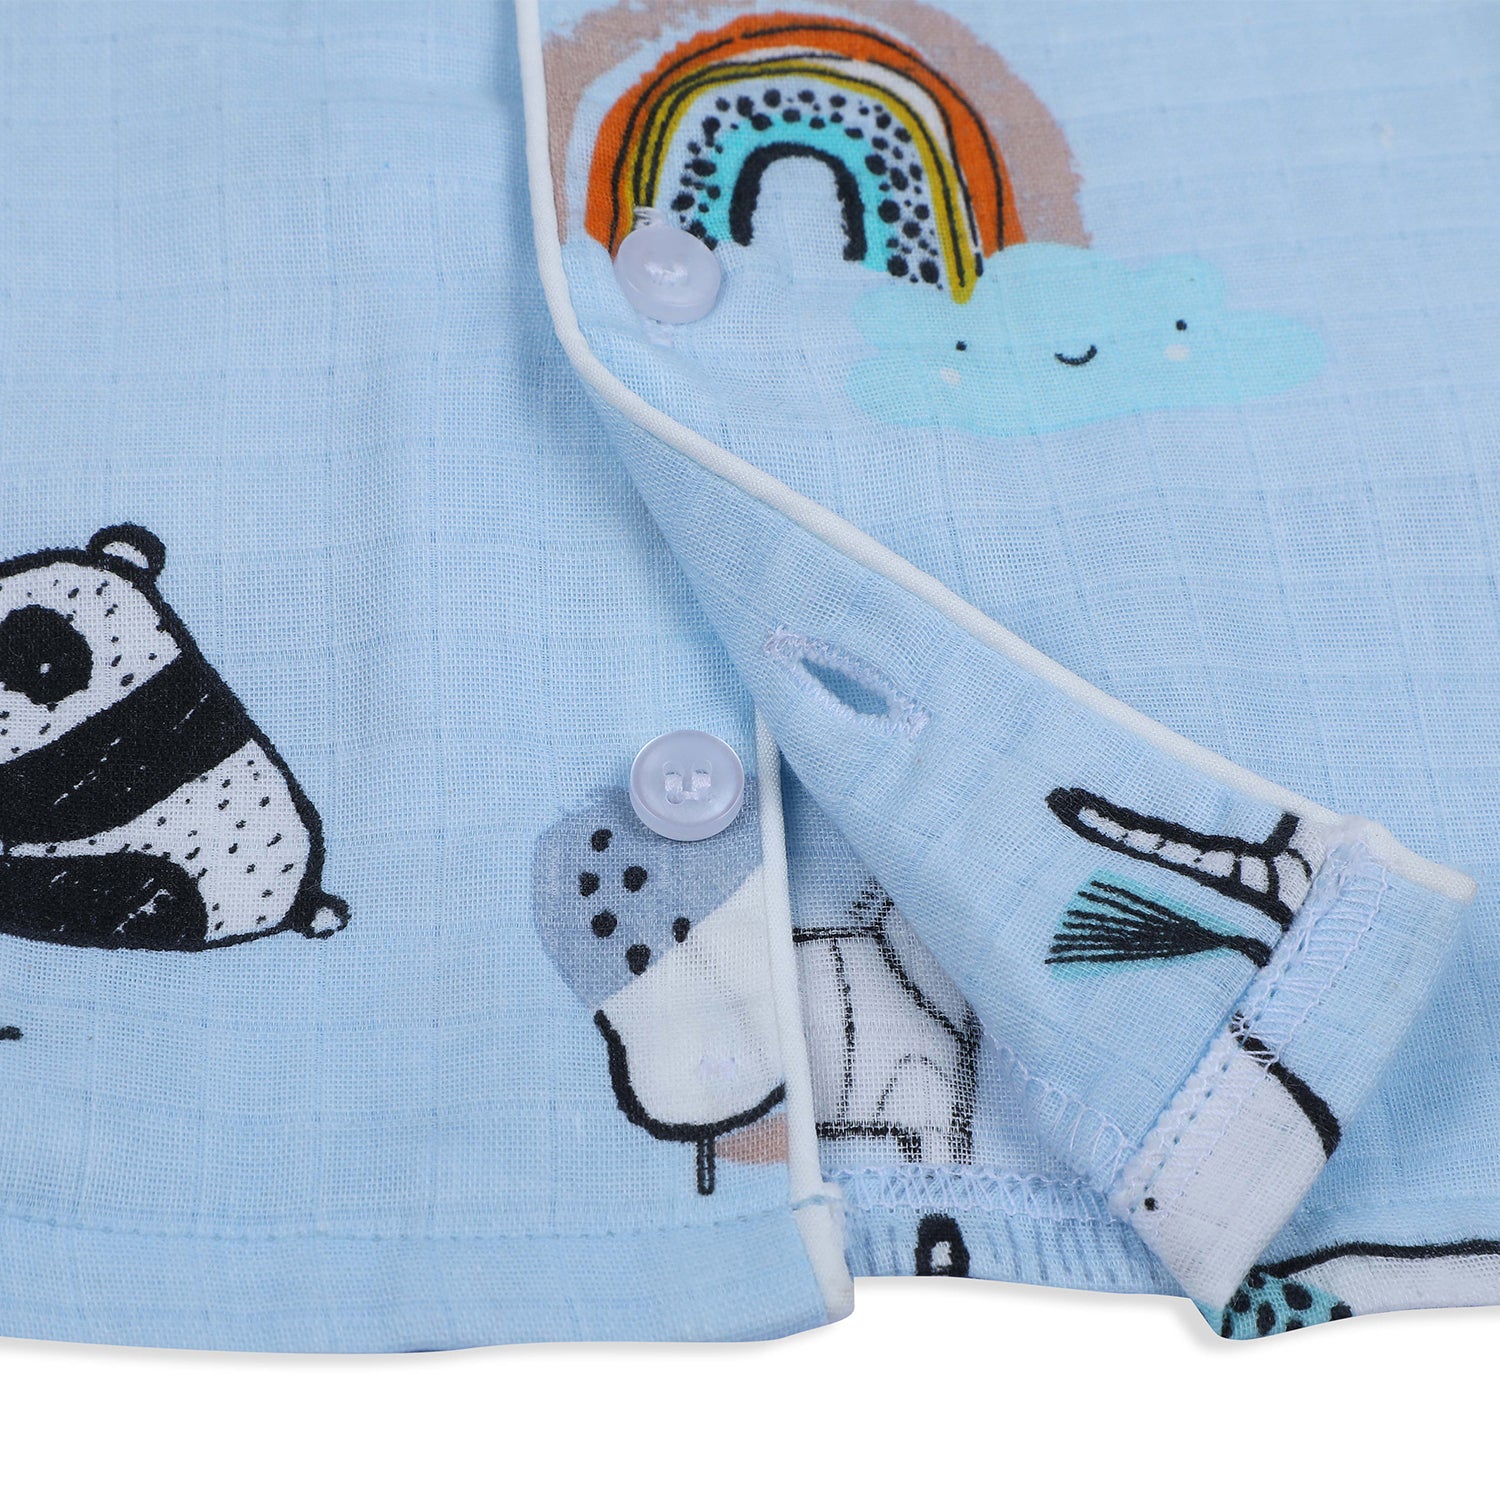 Baby Moo Rainbow With Animals Half Sleeves Muslin Shirt And Pyjama Night Suit - Blue - Baby Moo